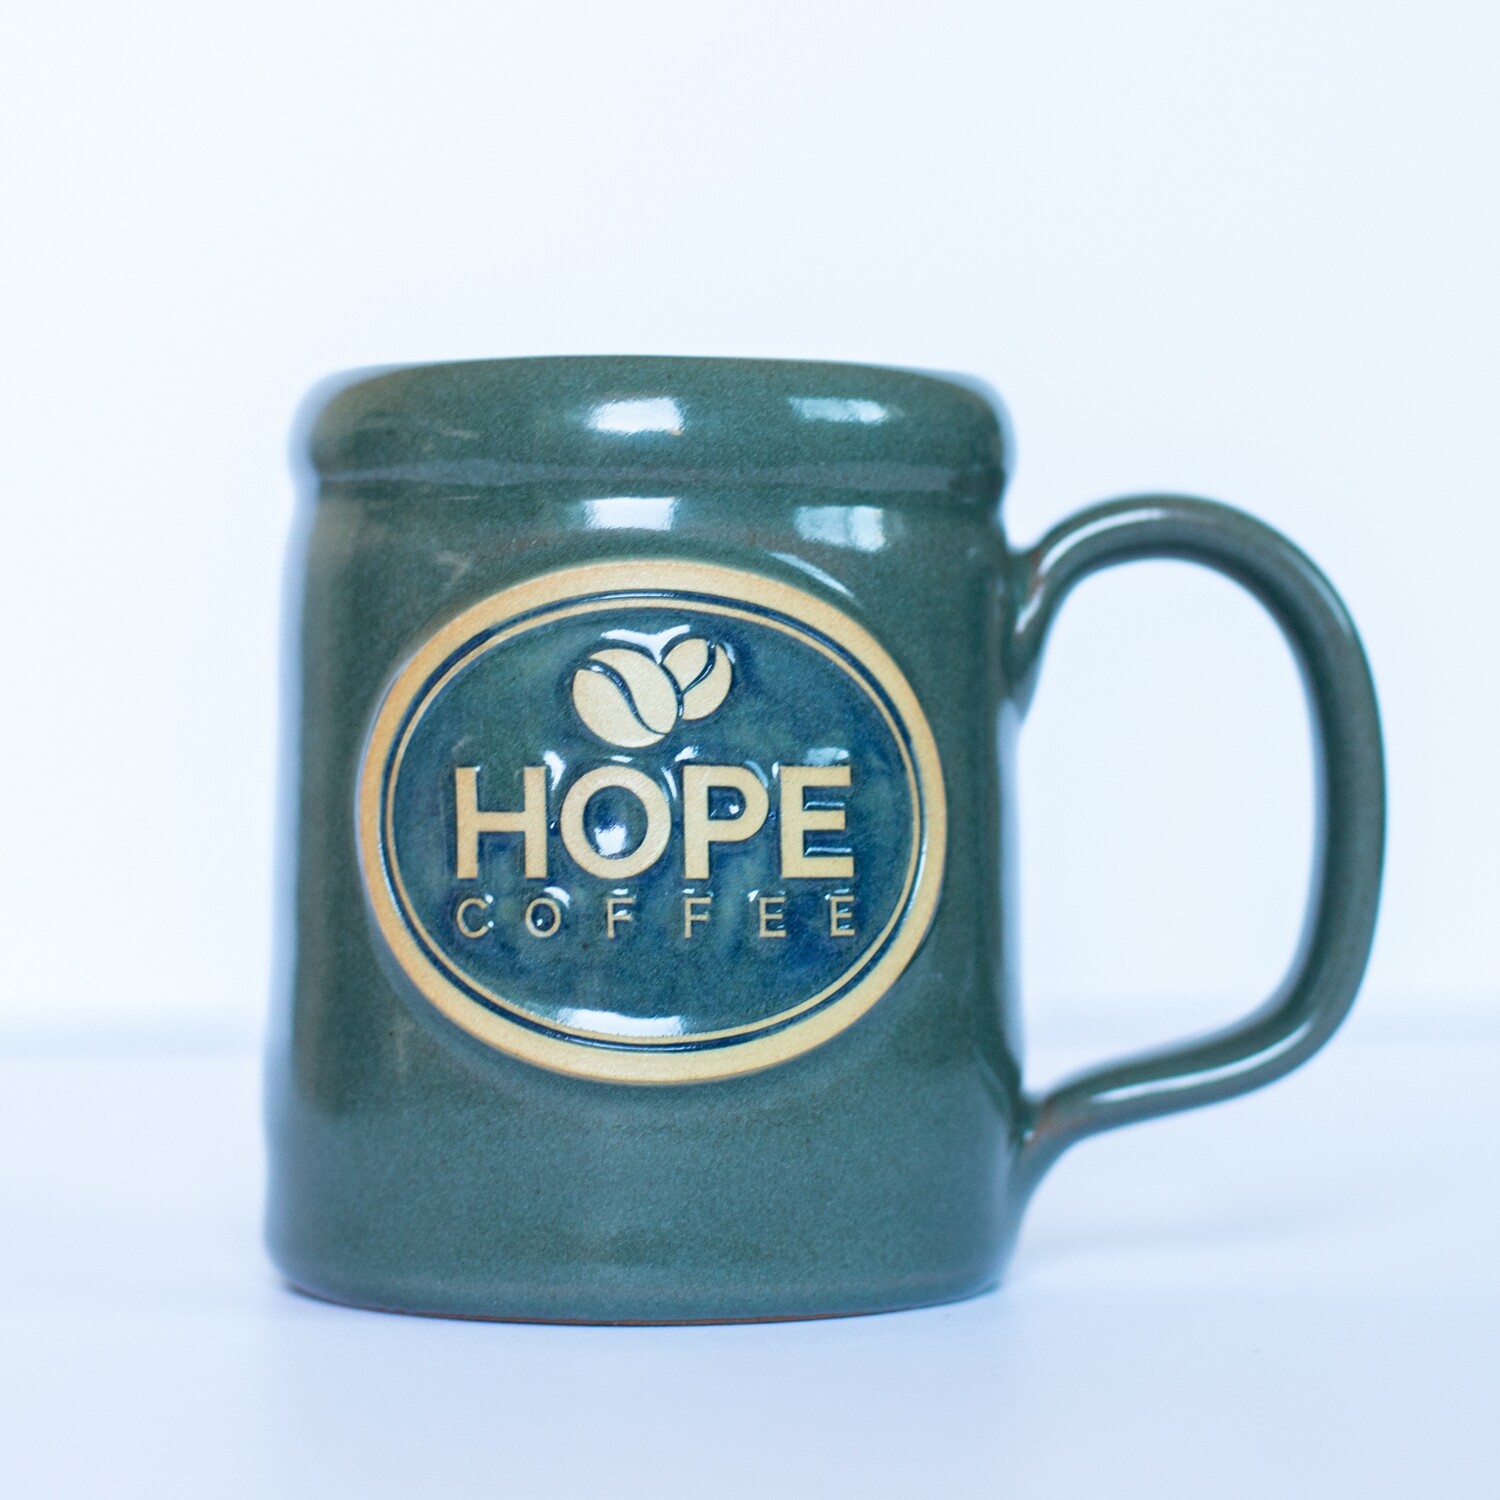 HOPE Coffee 14 oz Handcrafted Stoneware Mug - Camper Style Sage Glaze